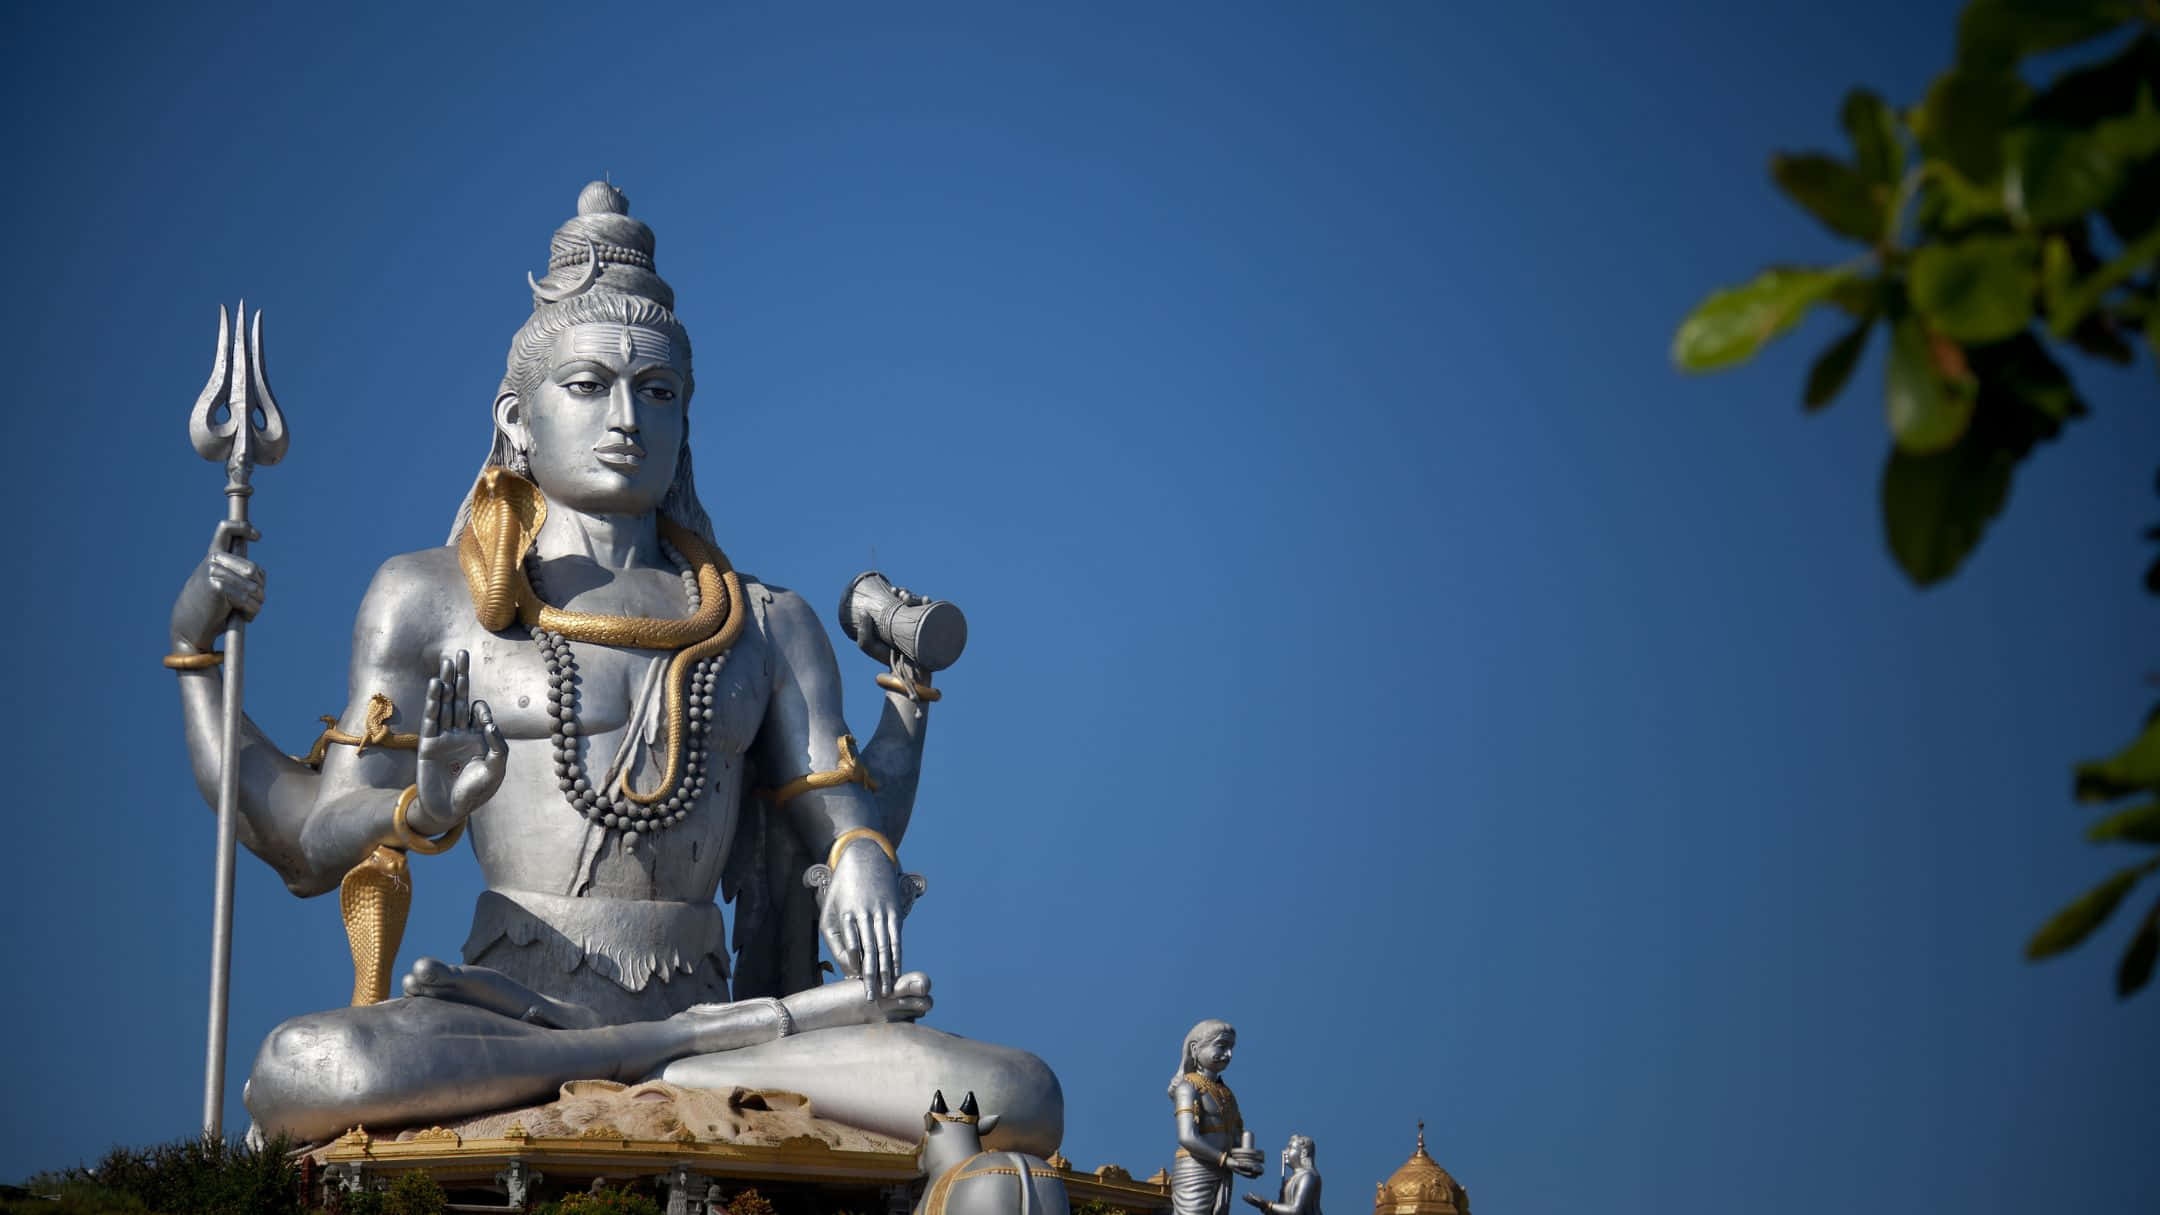 Lord Shiva, Powerful Hindu Deity